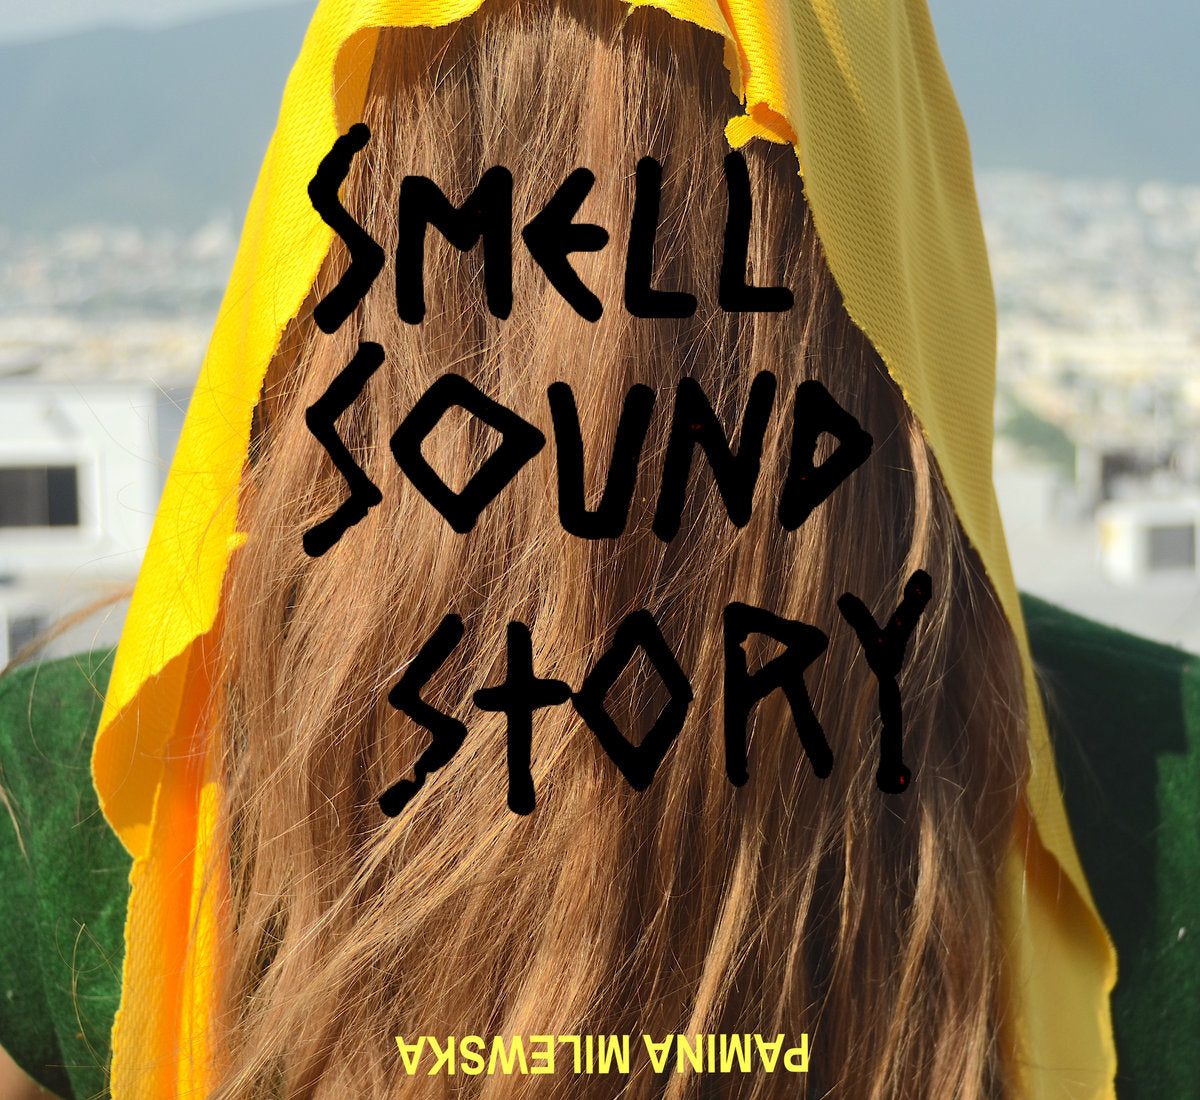 Pamina Milewska - Smell Sound Story - Tape